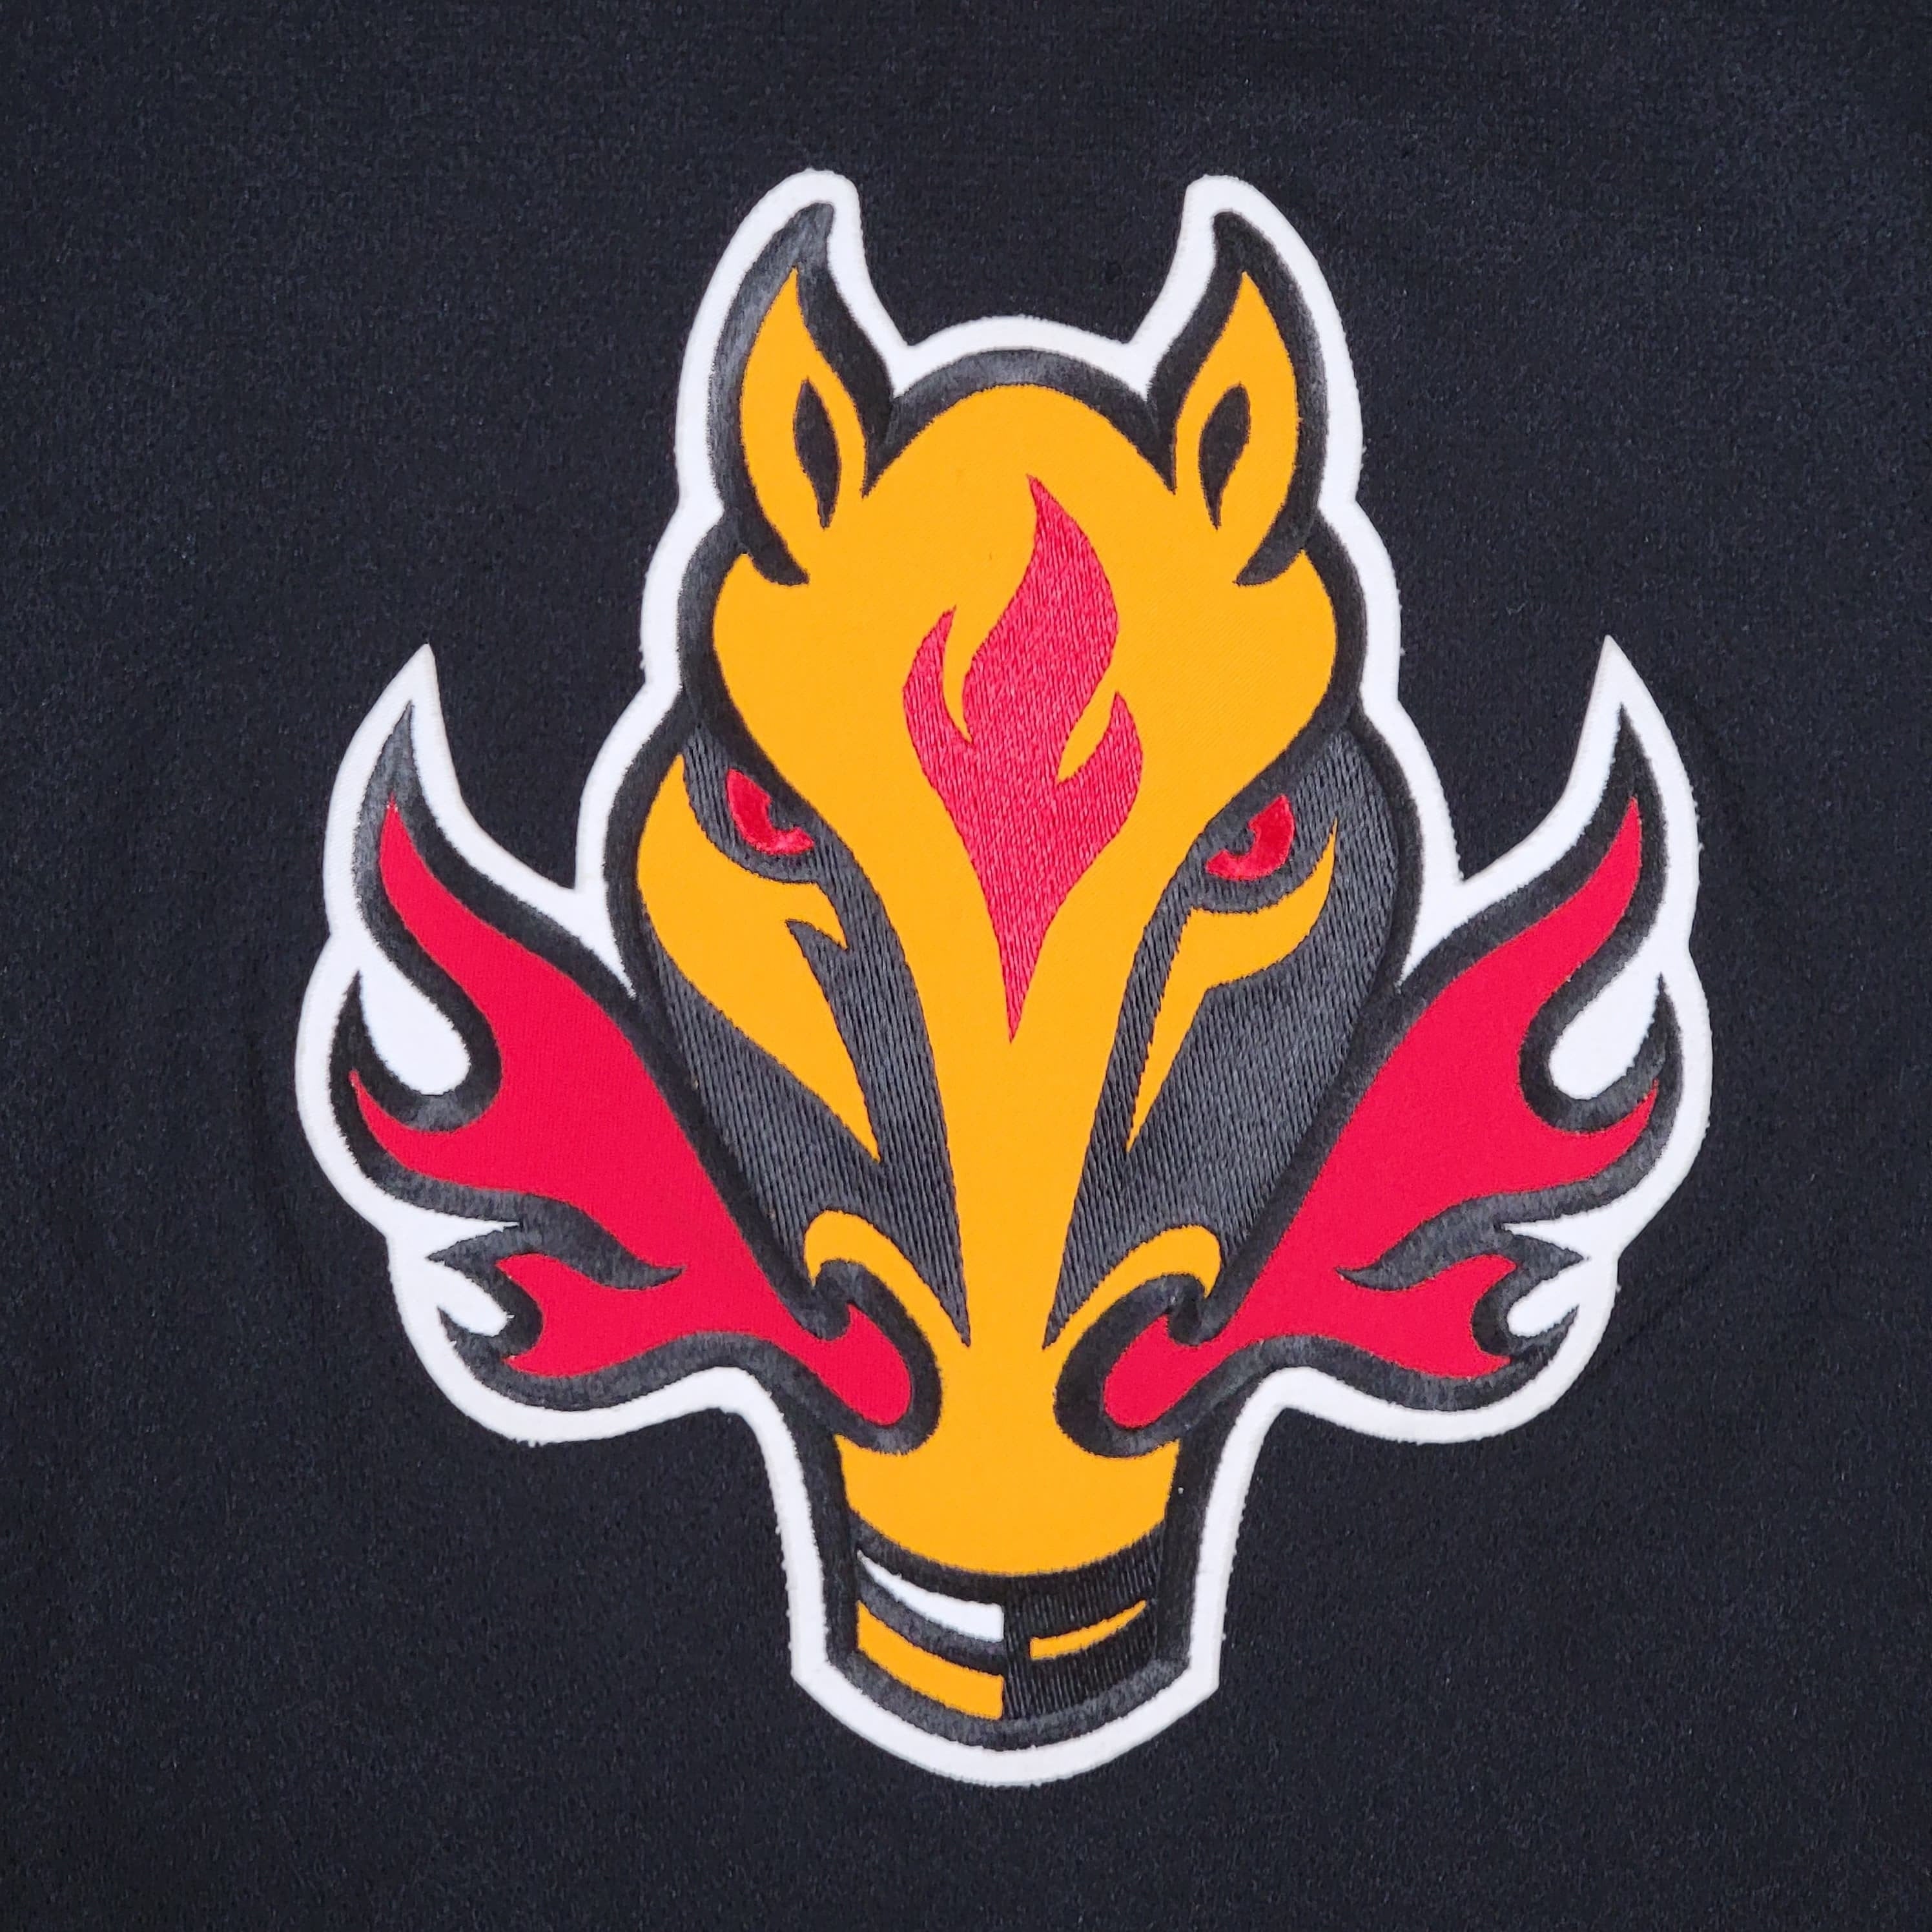 Calgary Flames Logo Black And White - Calgary Flames Horse Head